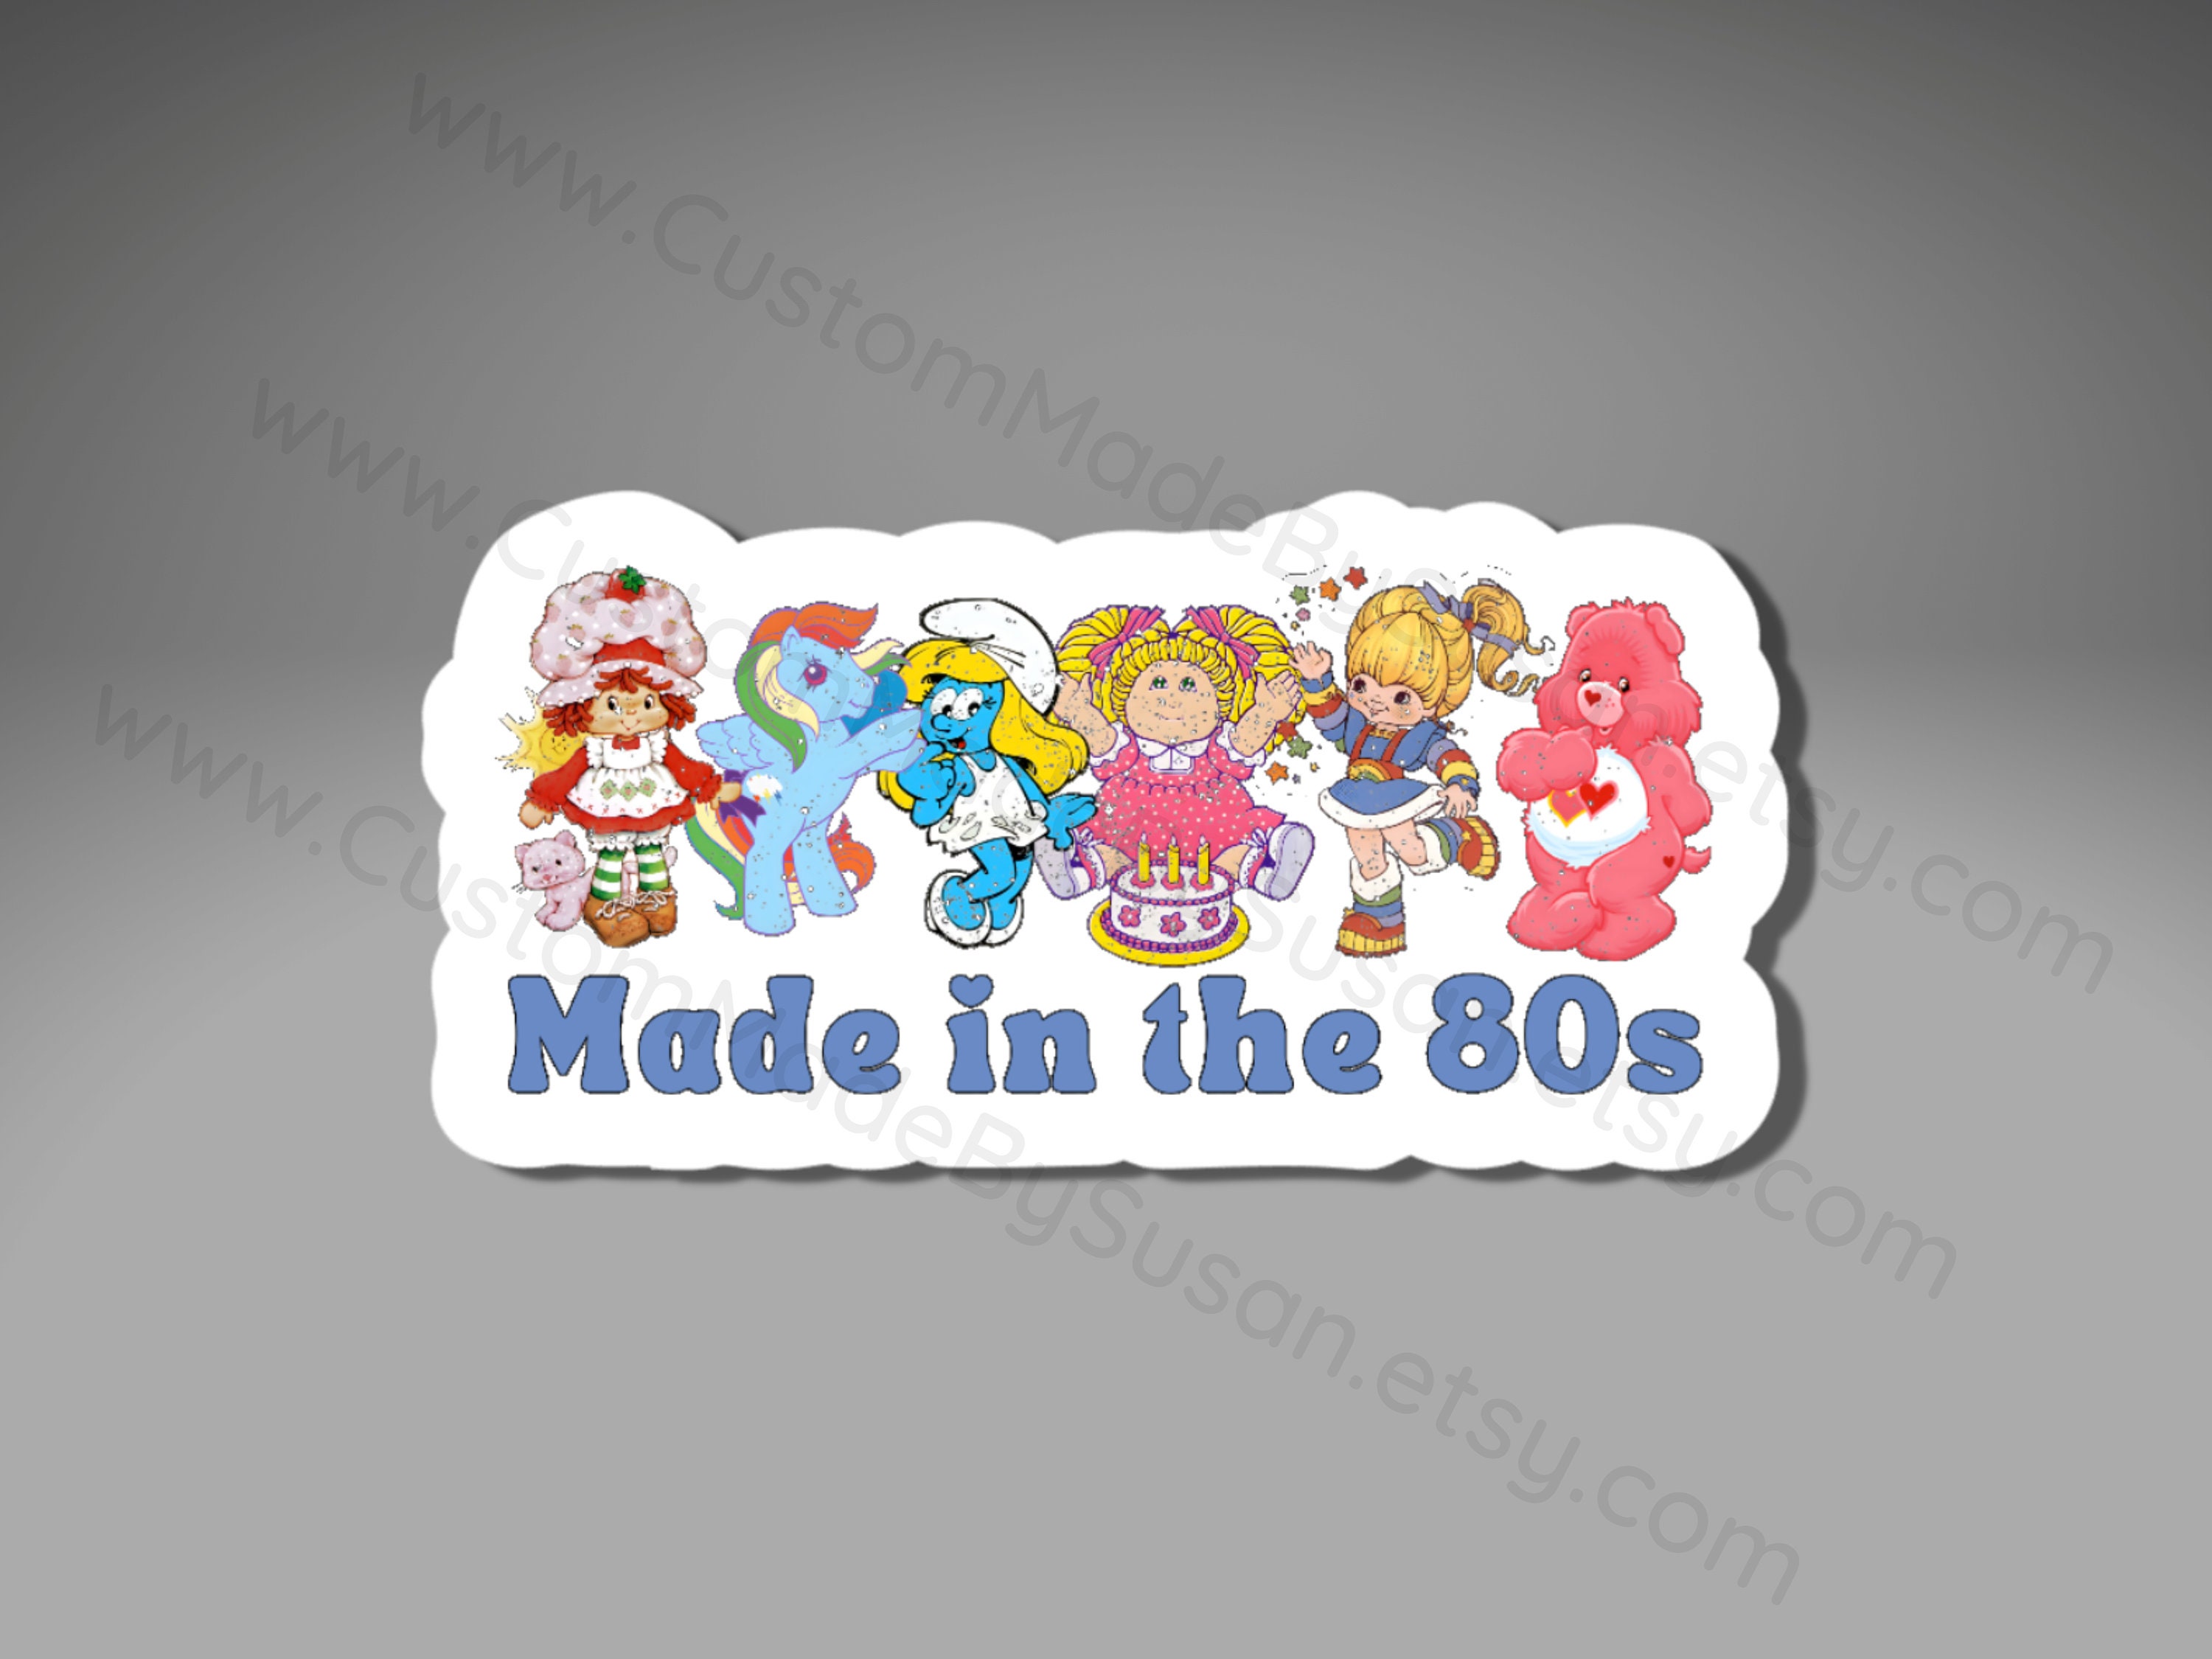 20 Sticker Set 80s & 90s 